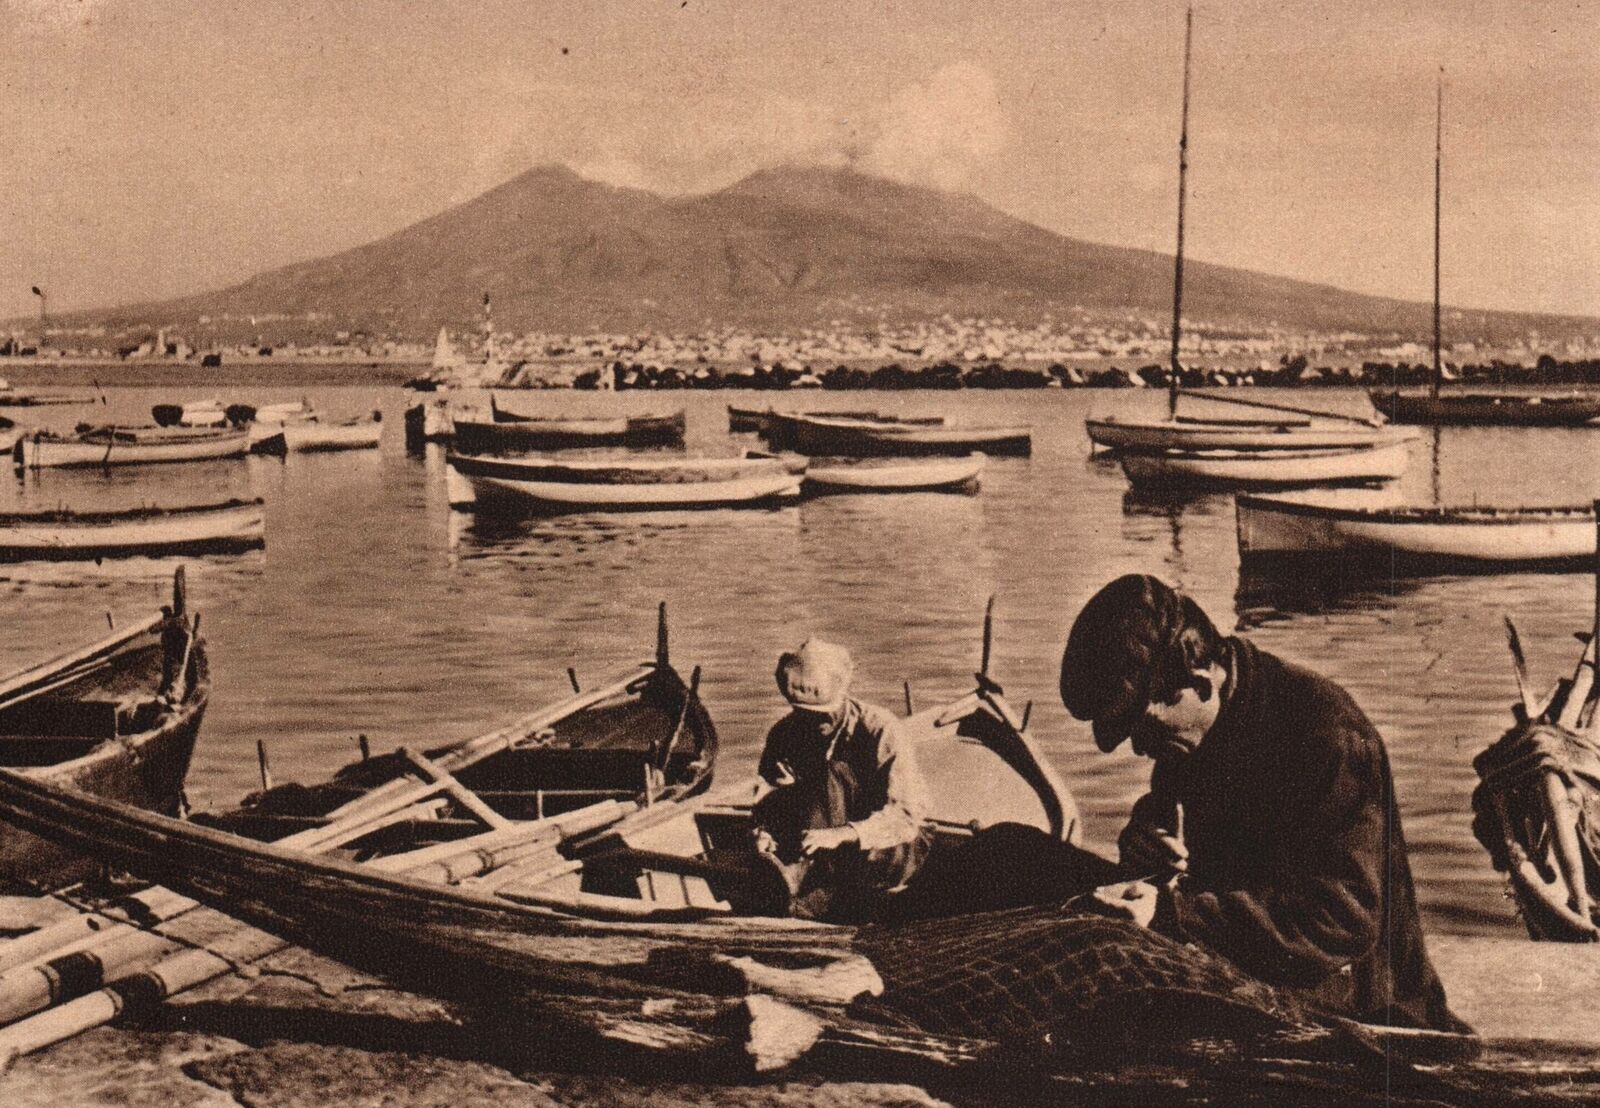 CONTINENTAL SIZE POSTCARD FISHERMEN AT SANTA LUCIA NAPLES ITALY c. 1935-1940